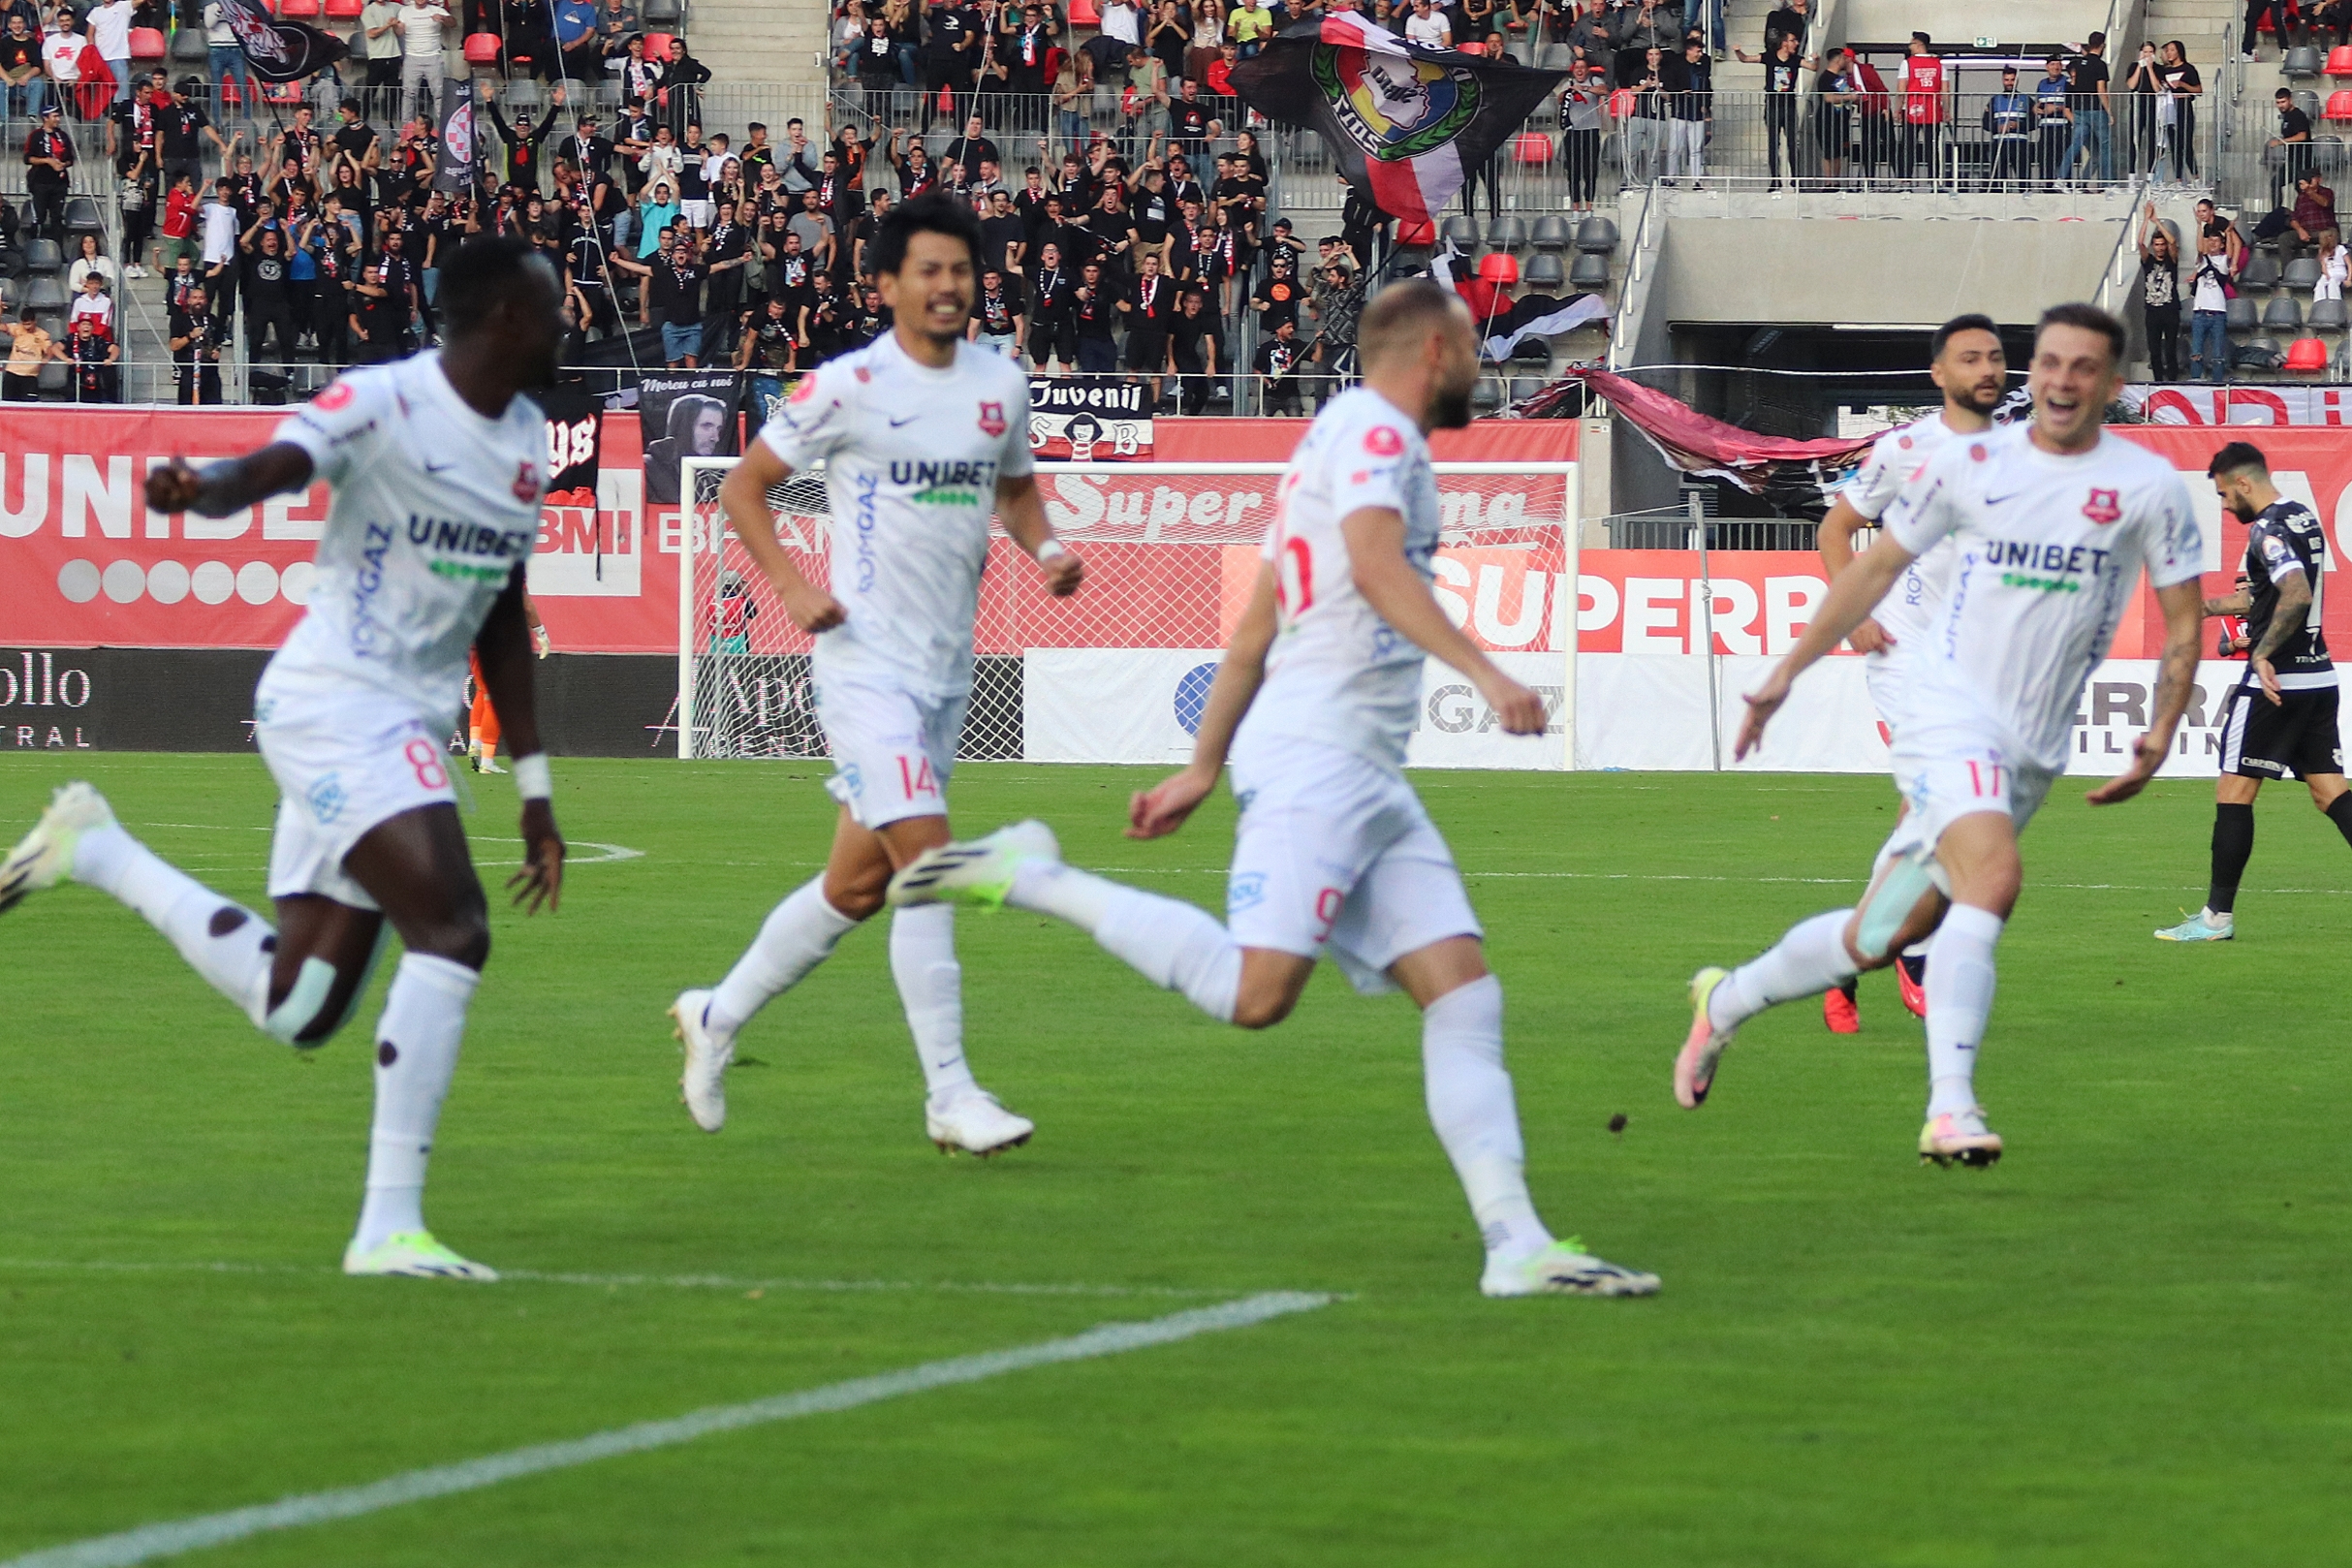 FCSB s-a distrat cu Hermannstadt și a câștigat la scor